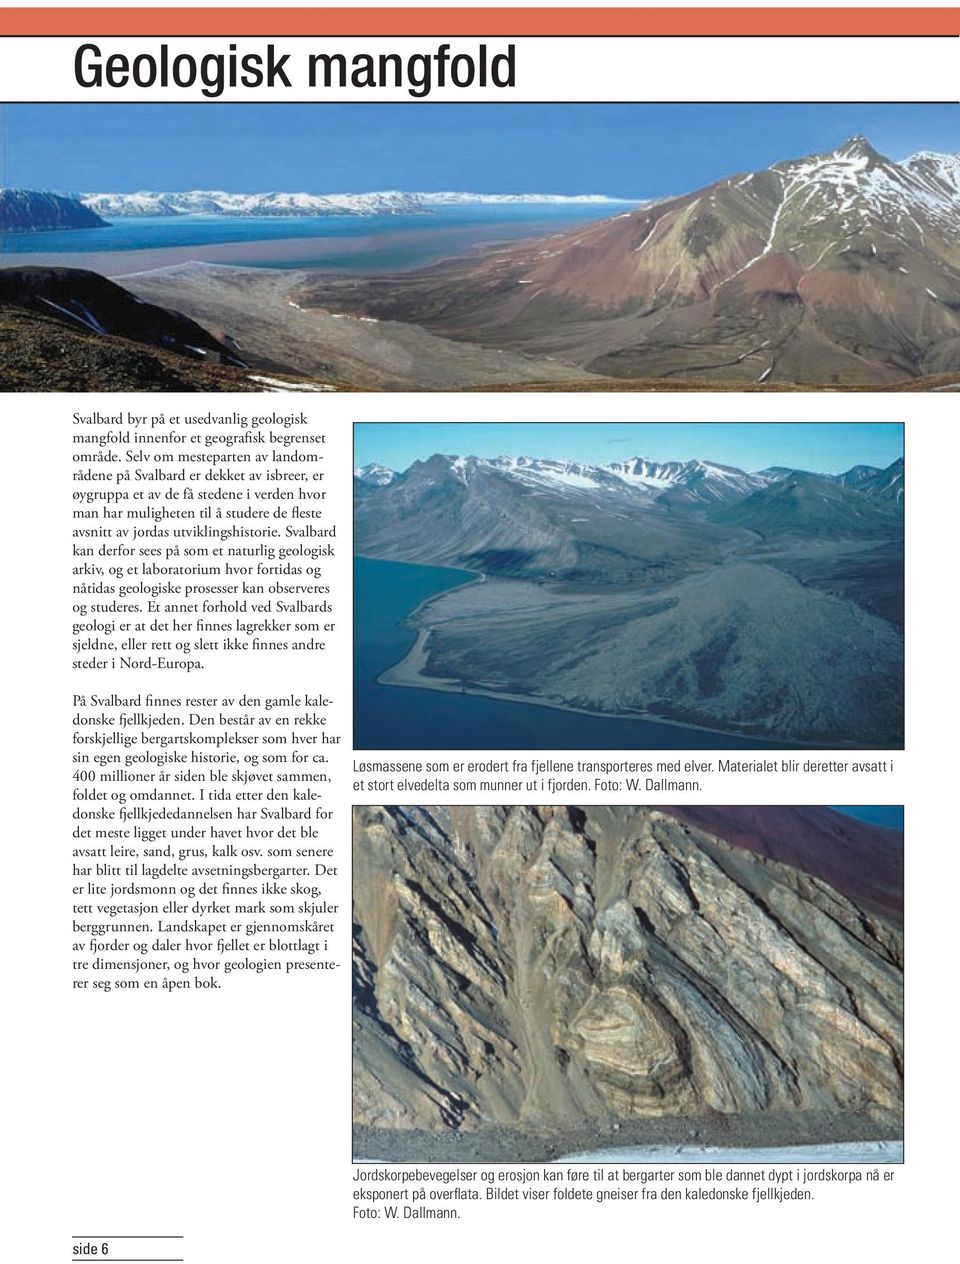 Svalbard kan derfor sees på som et naturlig geologisk arkiv, og et laboratorium hvor fortidas og nåtidas geologiske prosesser kan observeres og studeres.